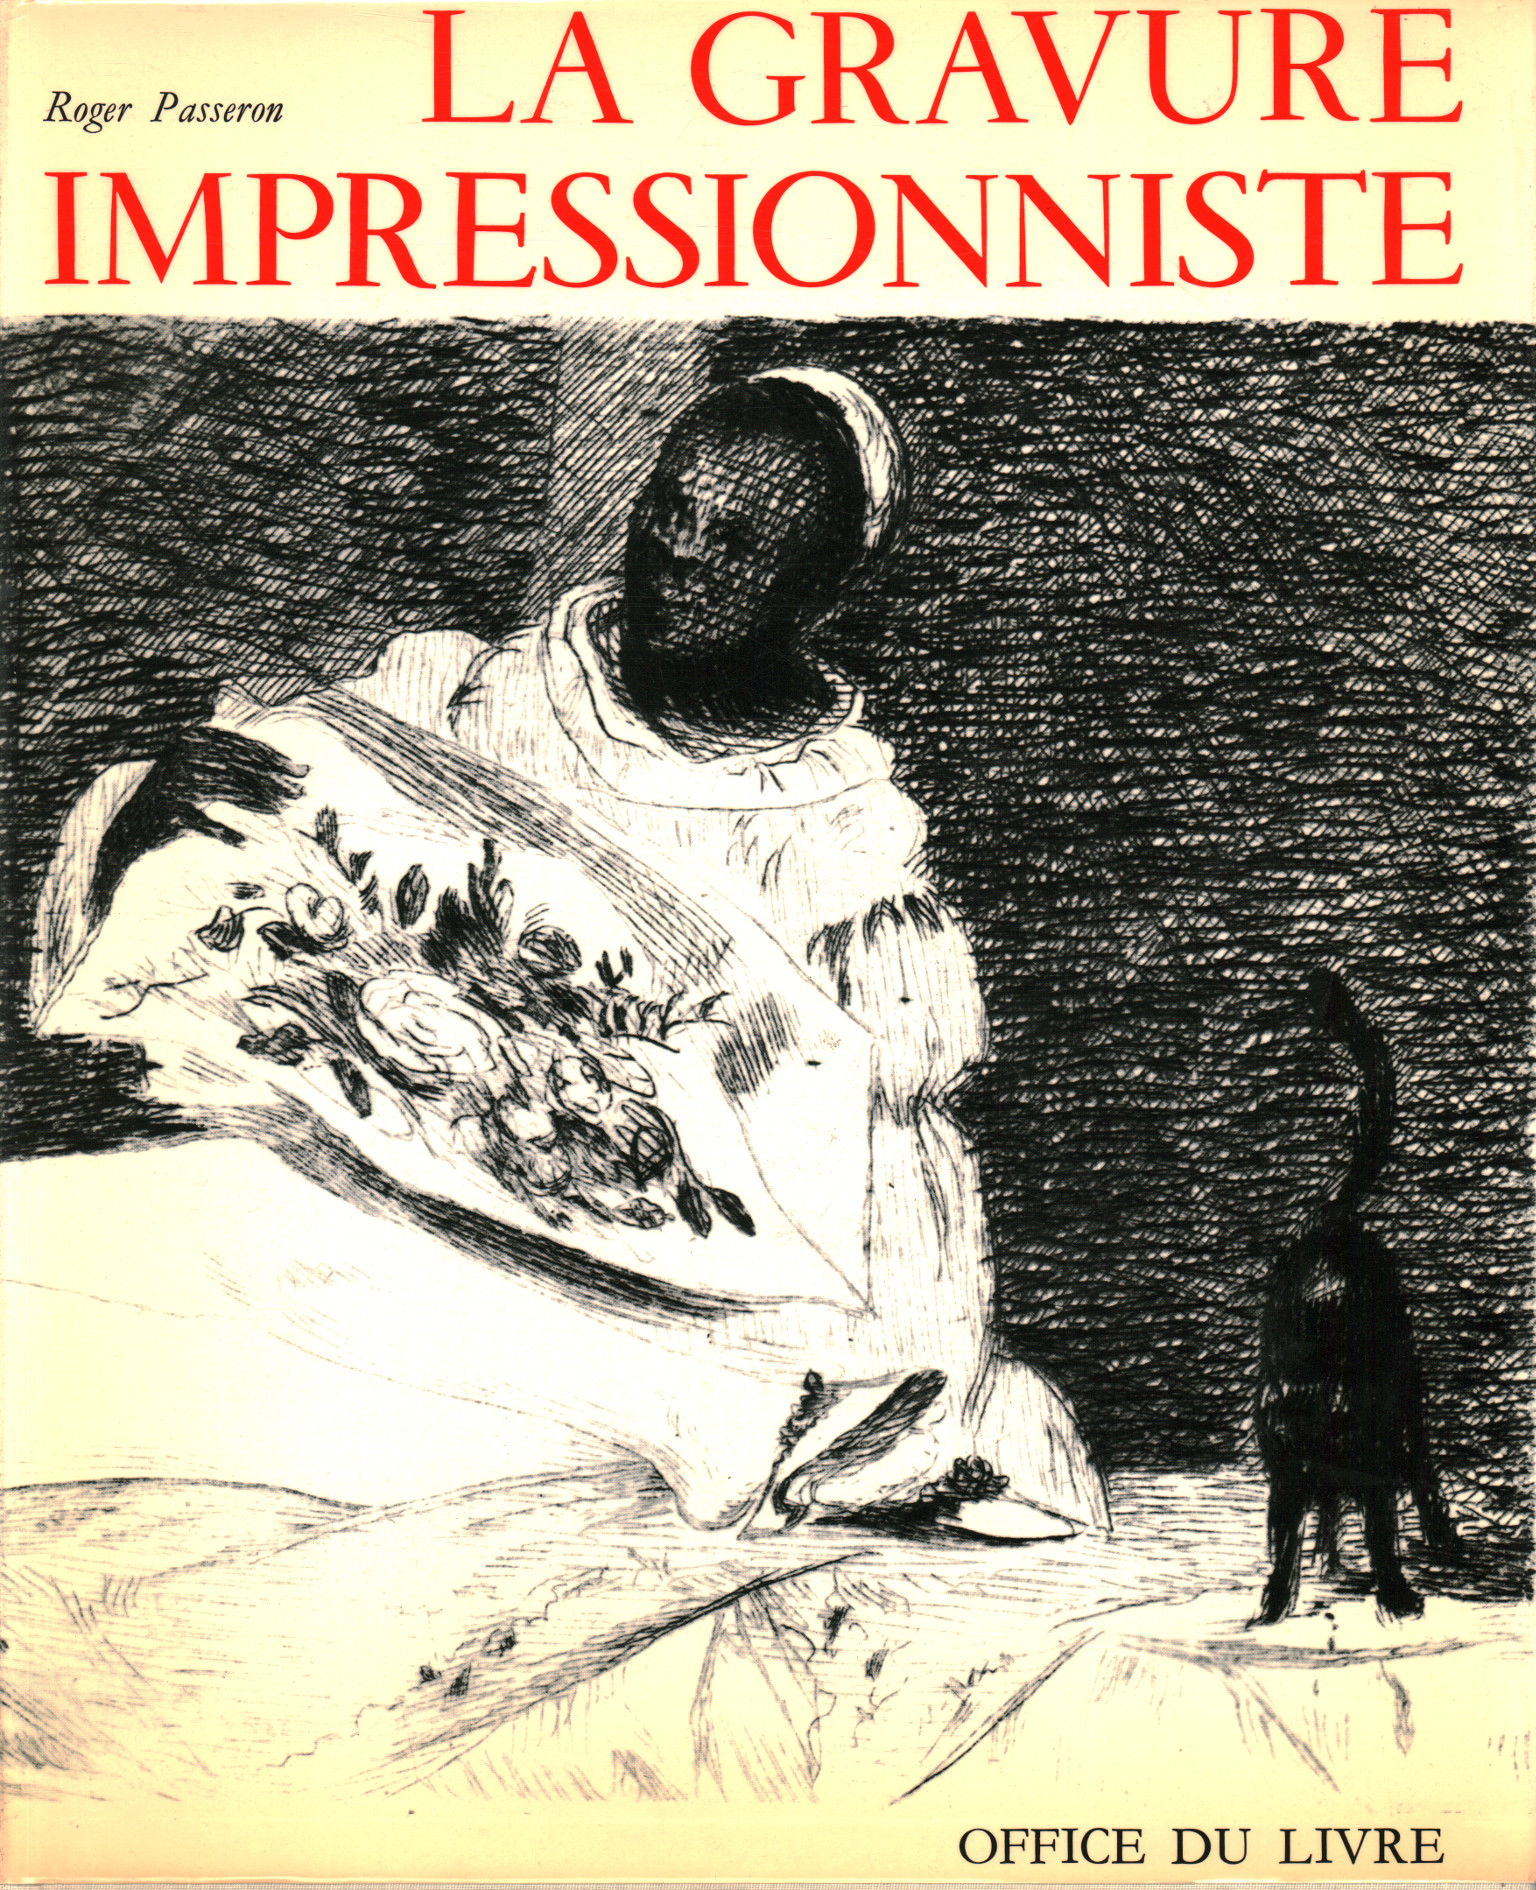 La gravure impressionniste, Roger Passeron